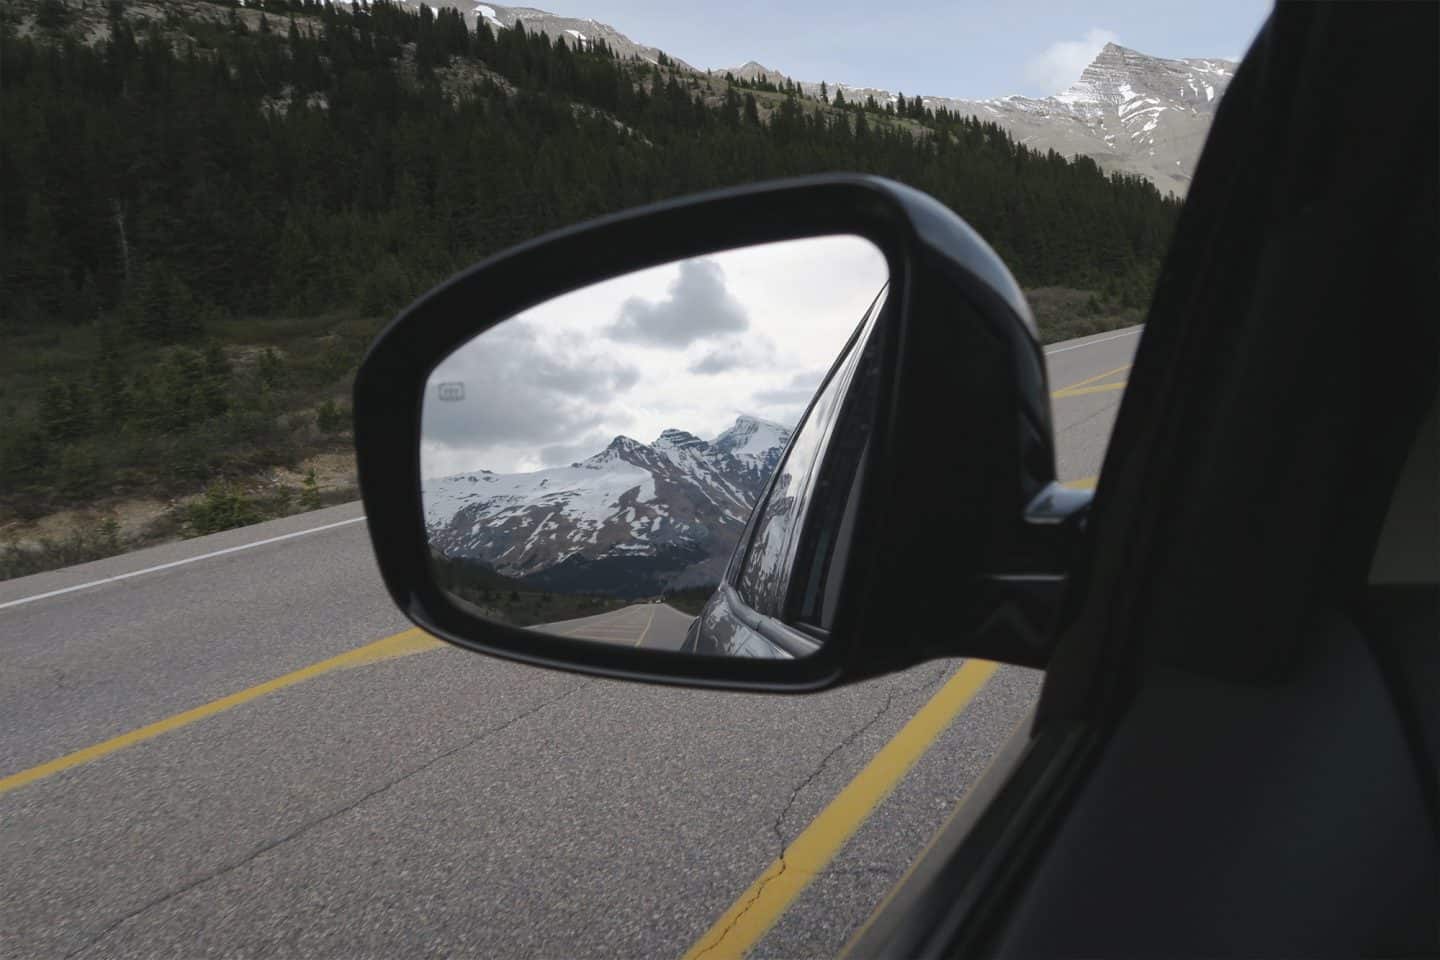 Road trip in Banff, Alberta